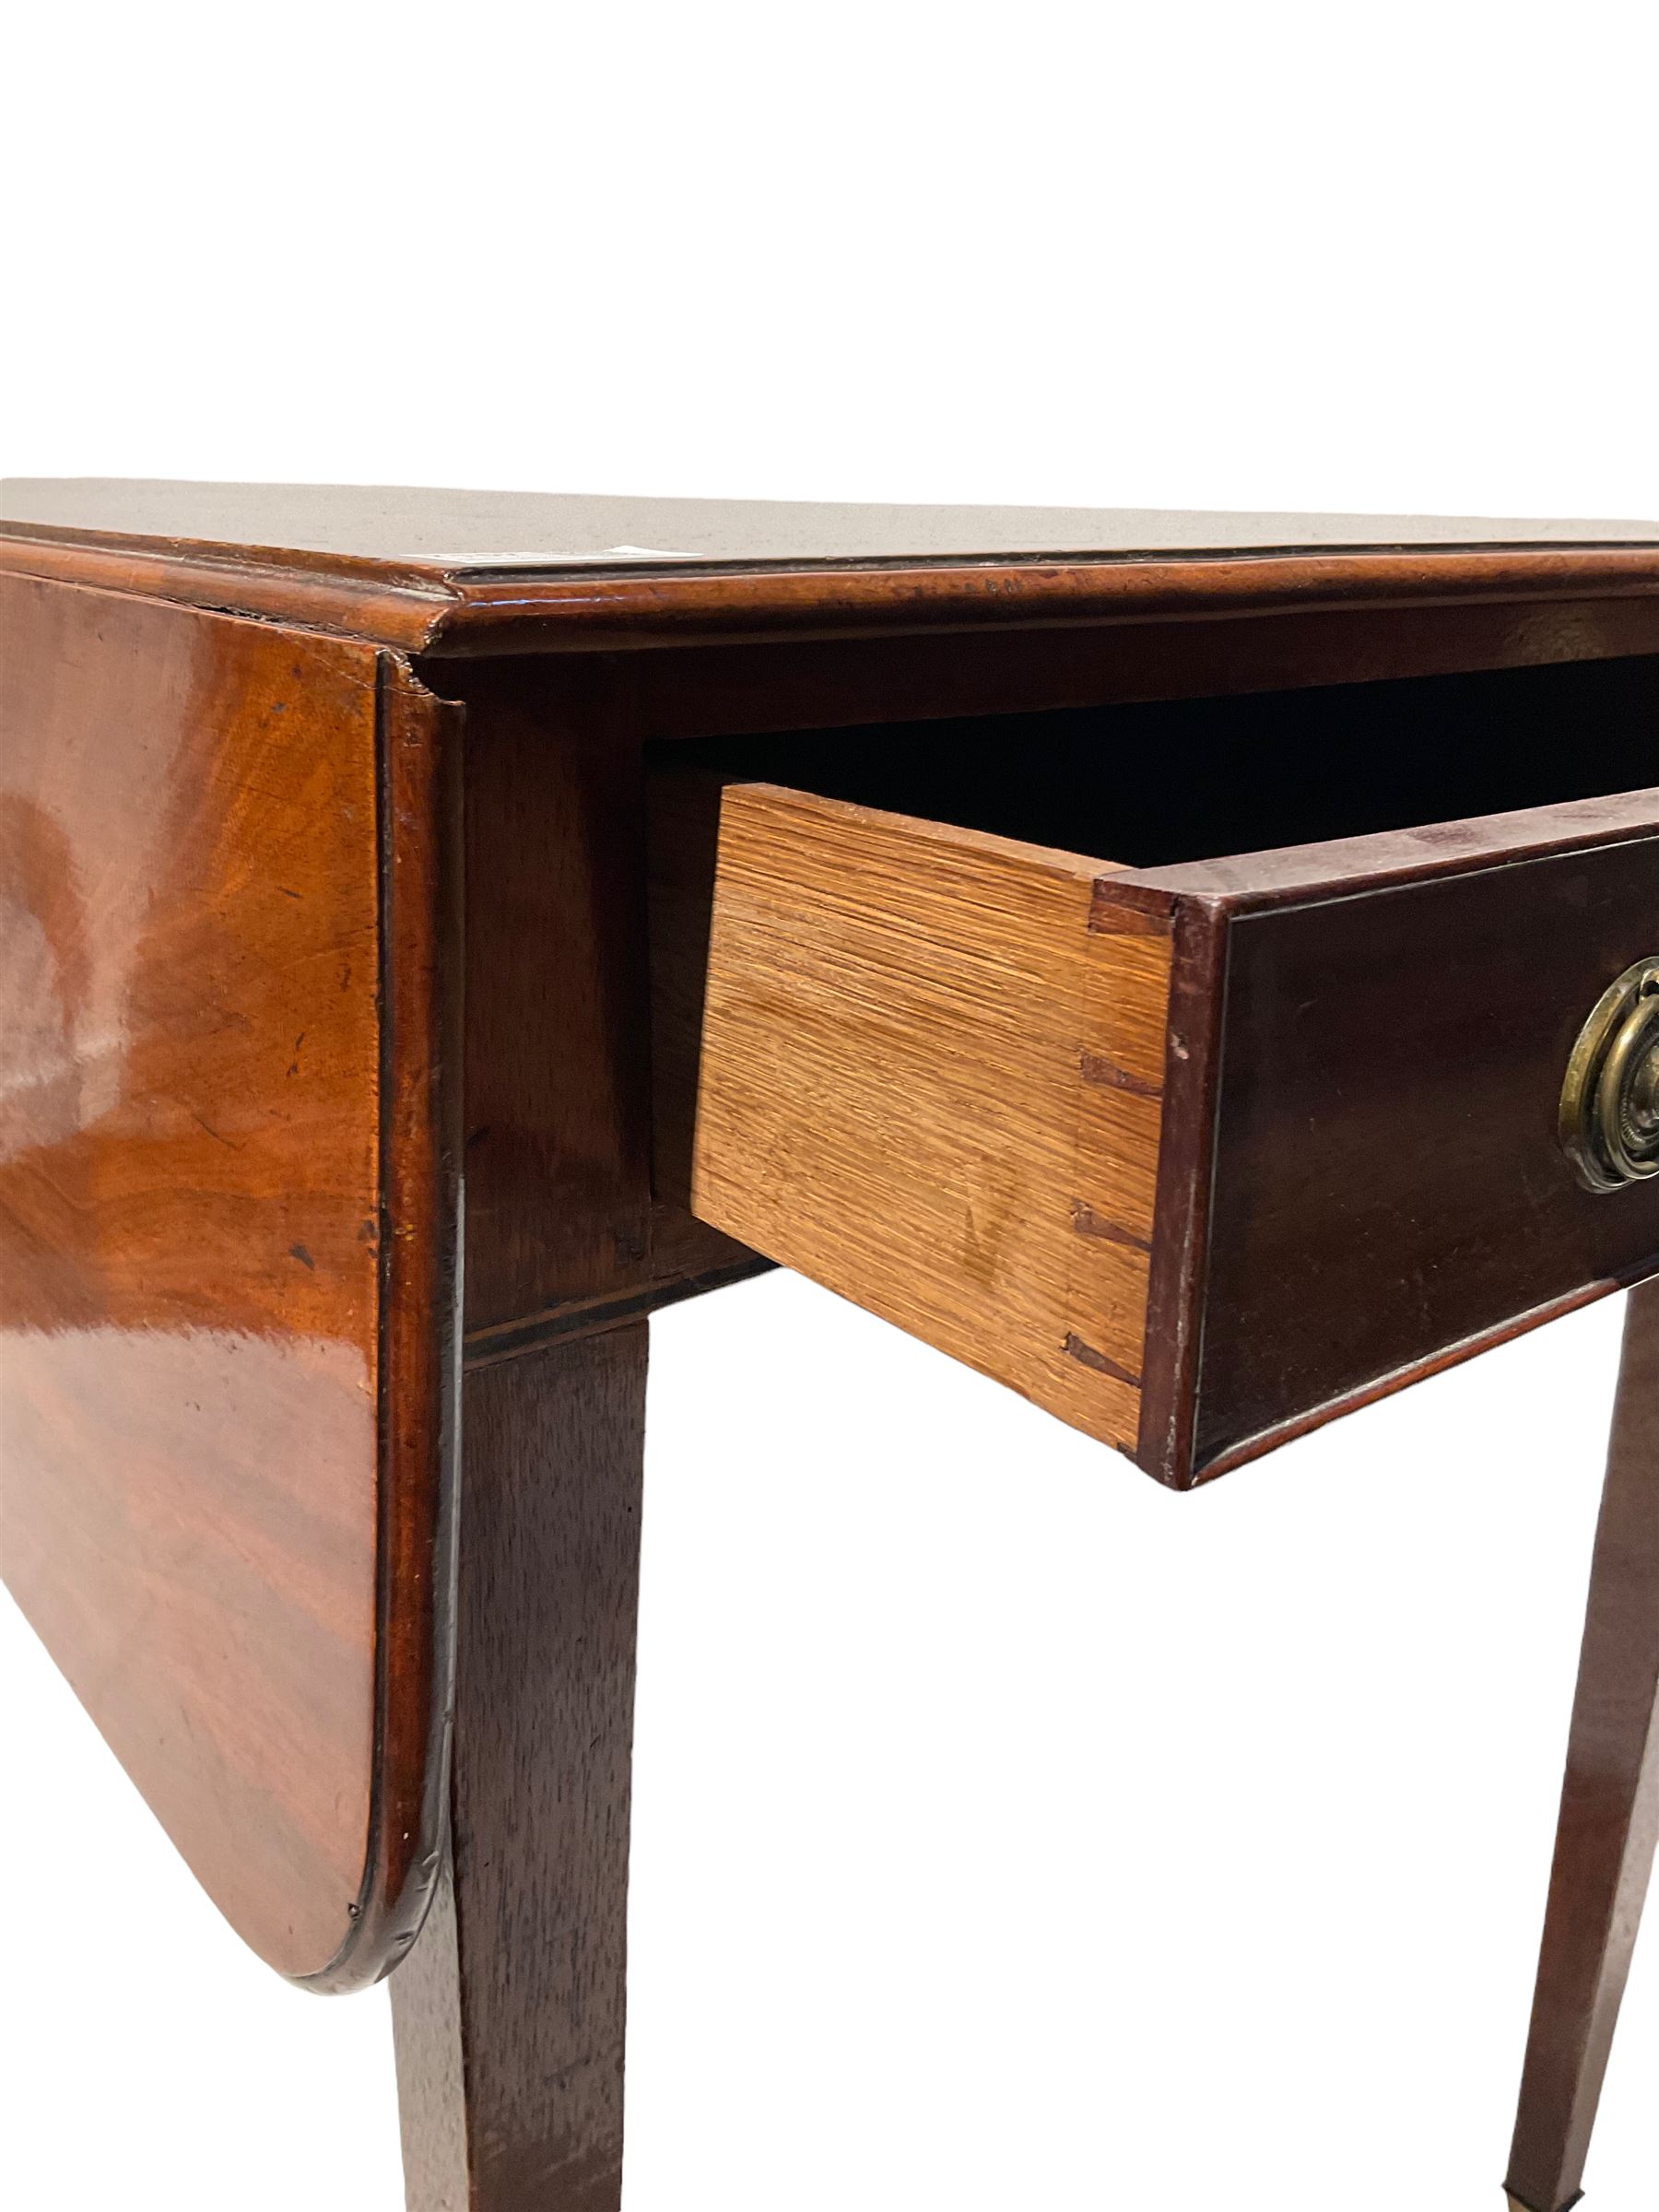 George III mahogany Pembroke table - Image 3 of 3